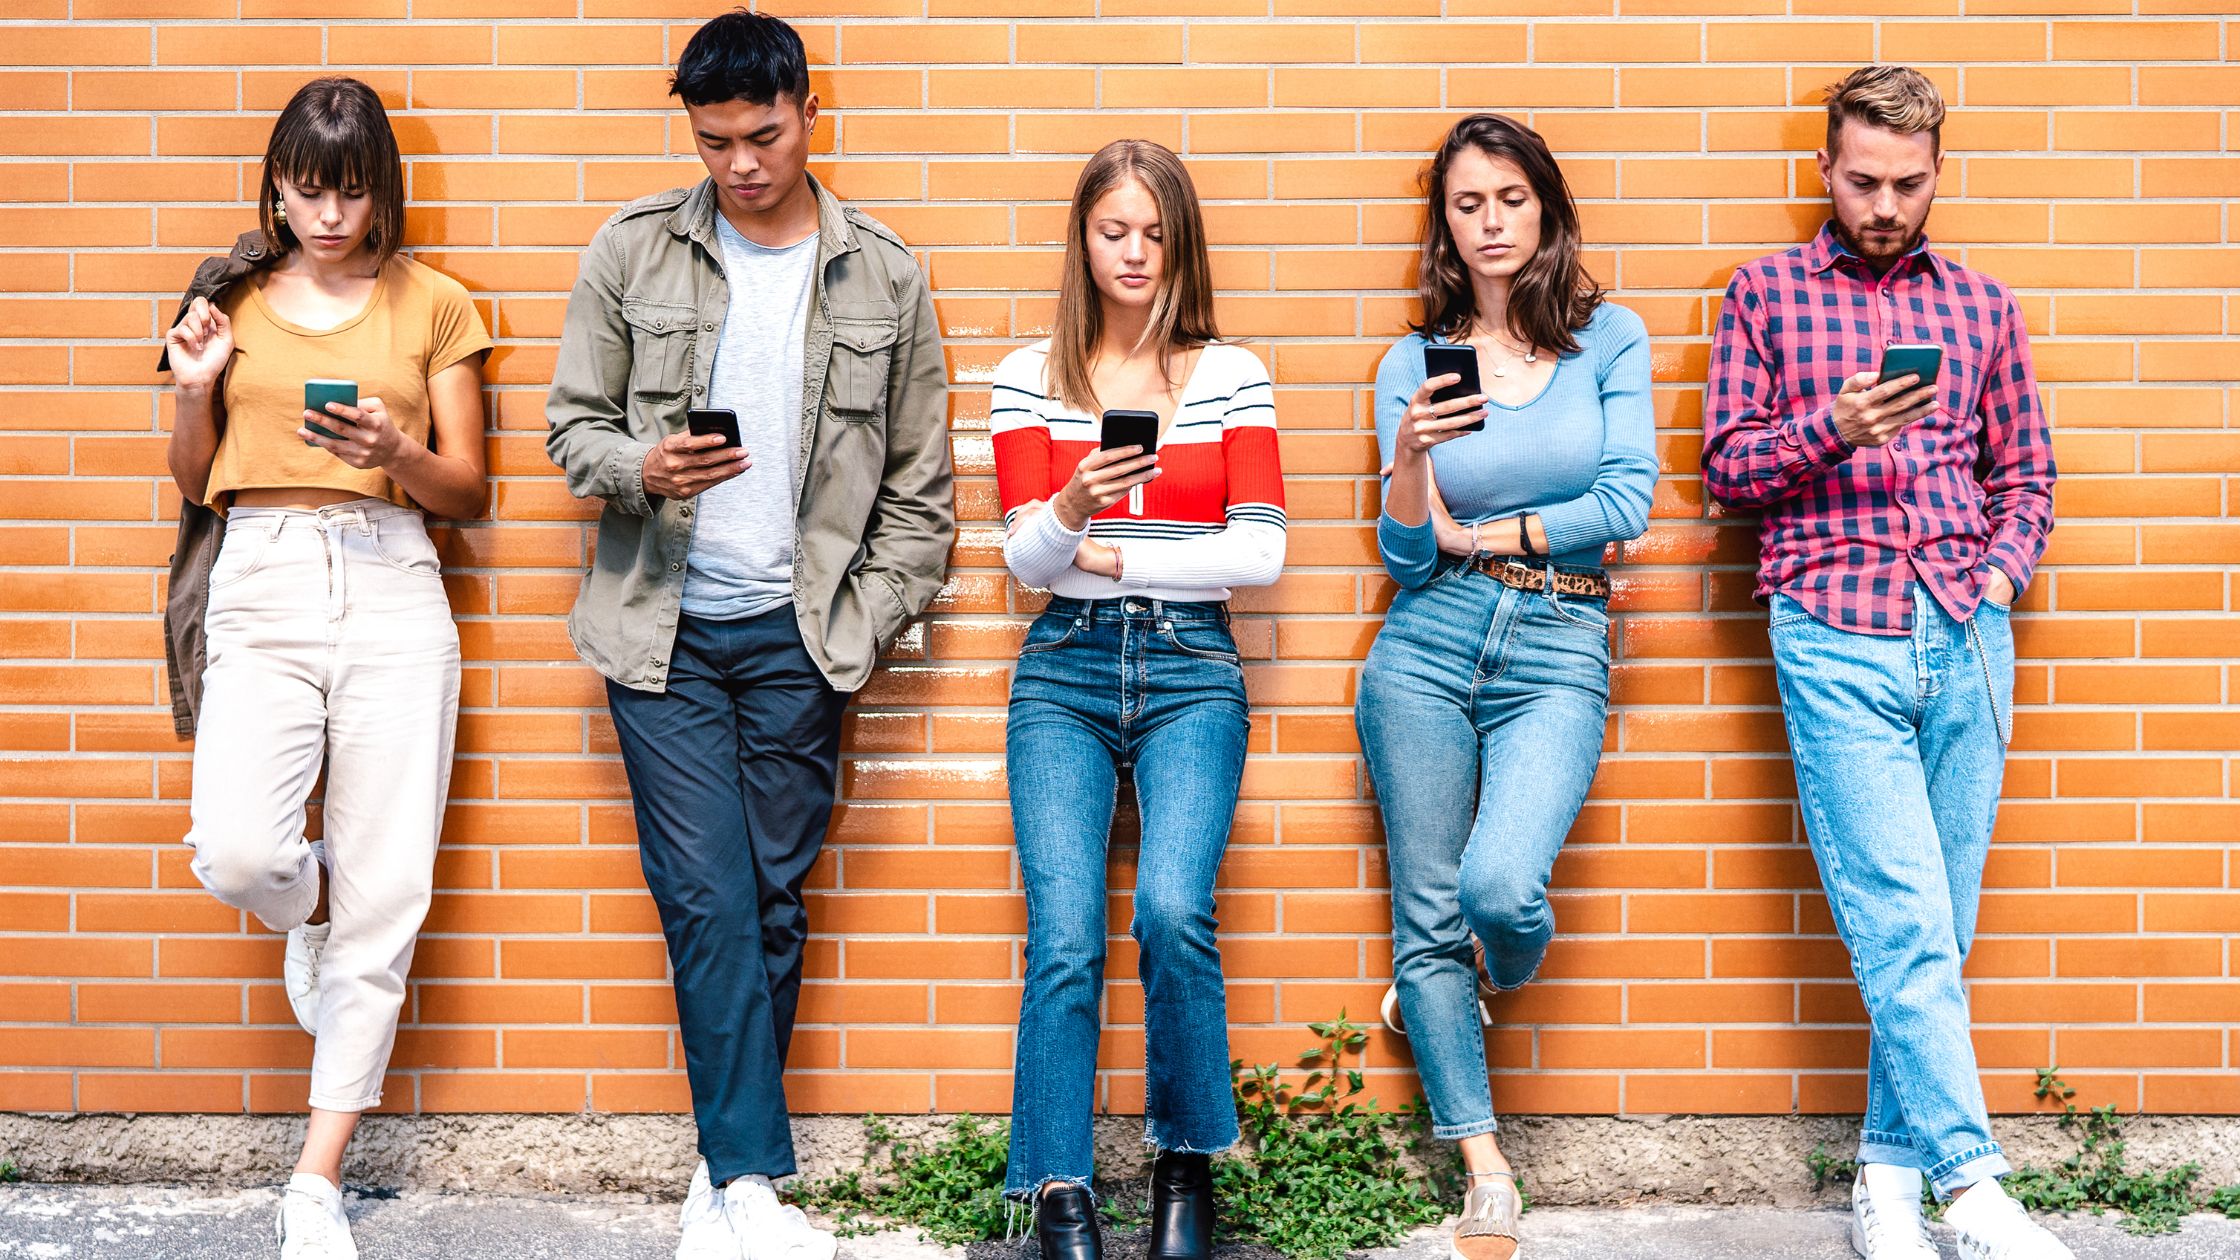 How to so a social media detox. Teens looking at their phones